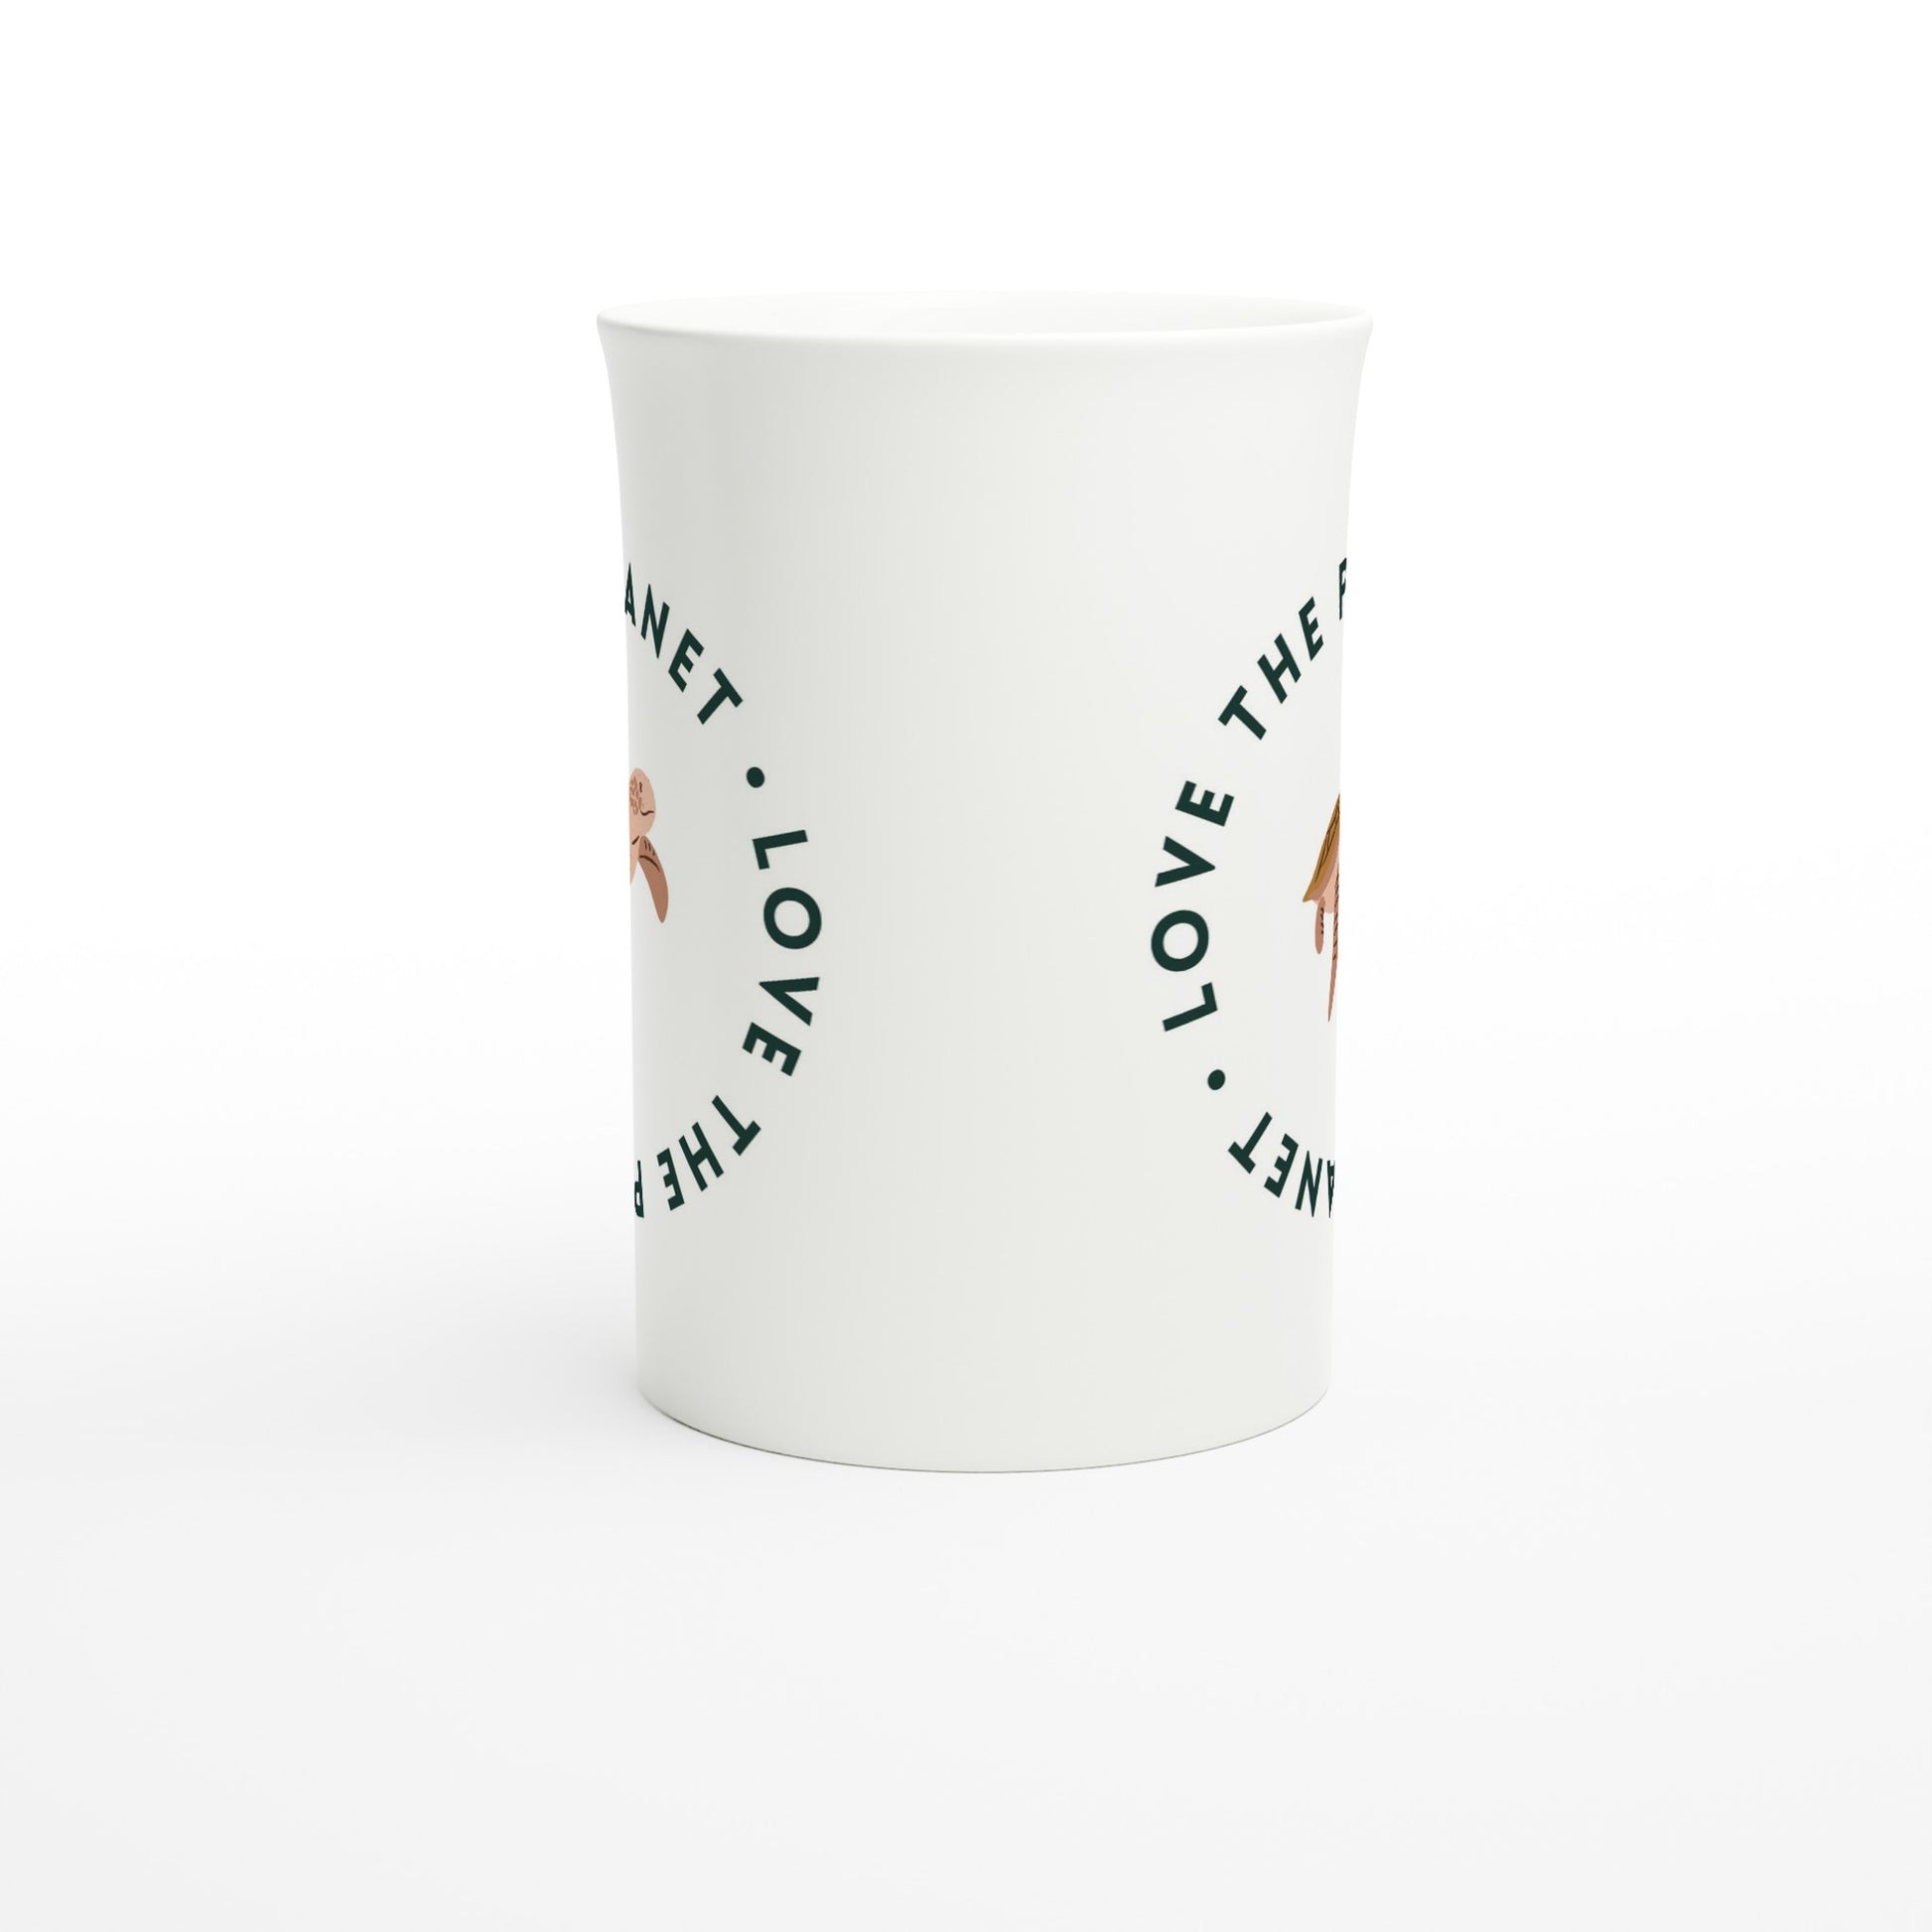 Love The Planet - White 10oz Porcelain Slim Mug Porcelain Mug Environment